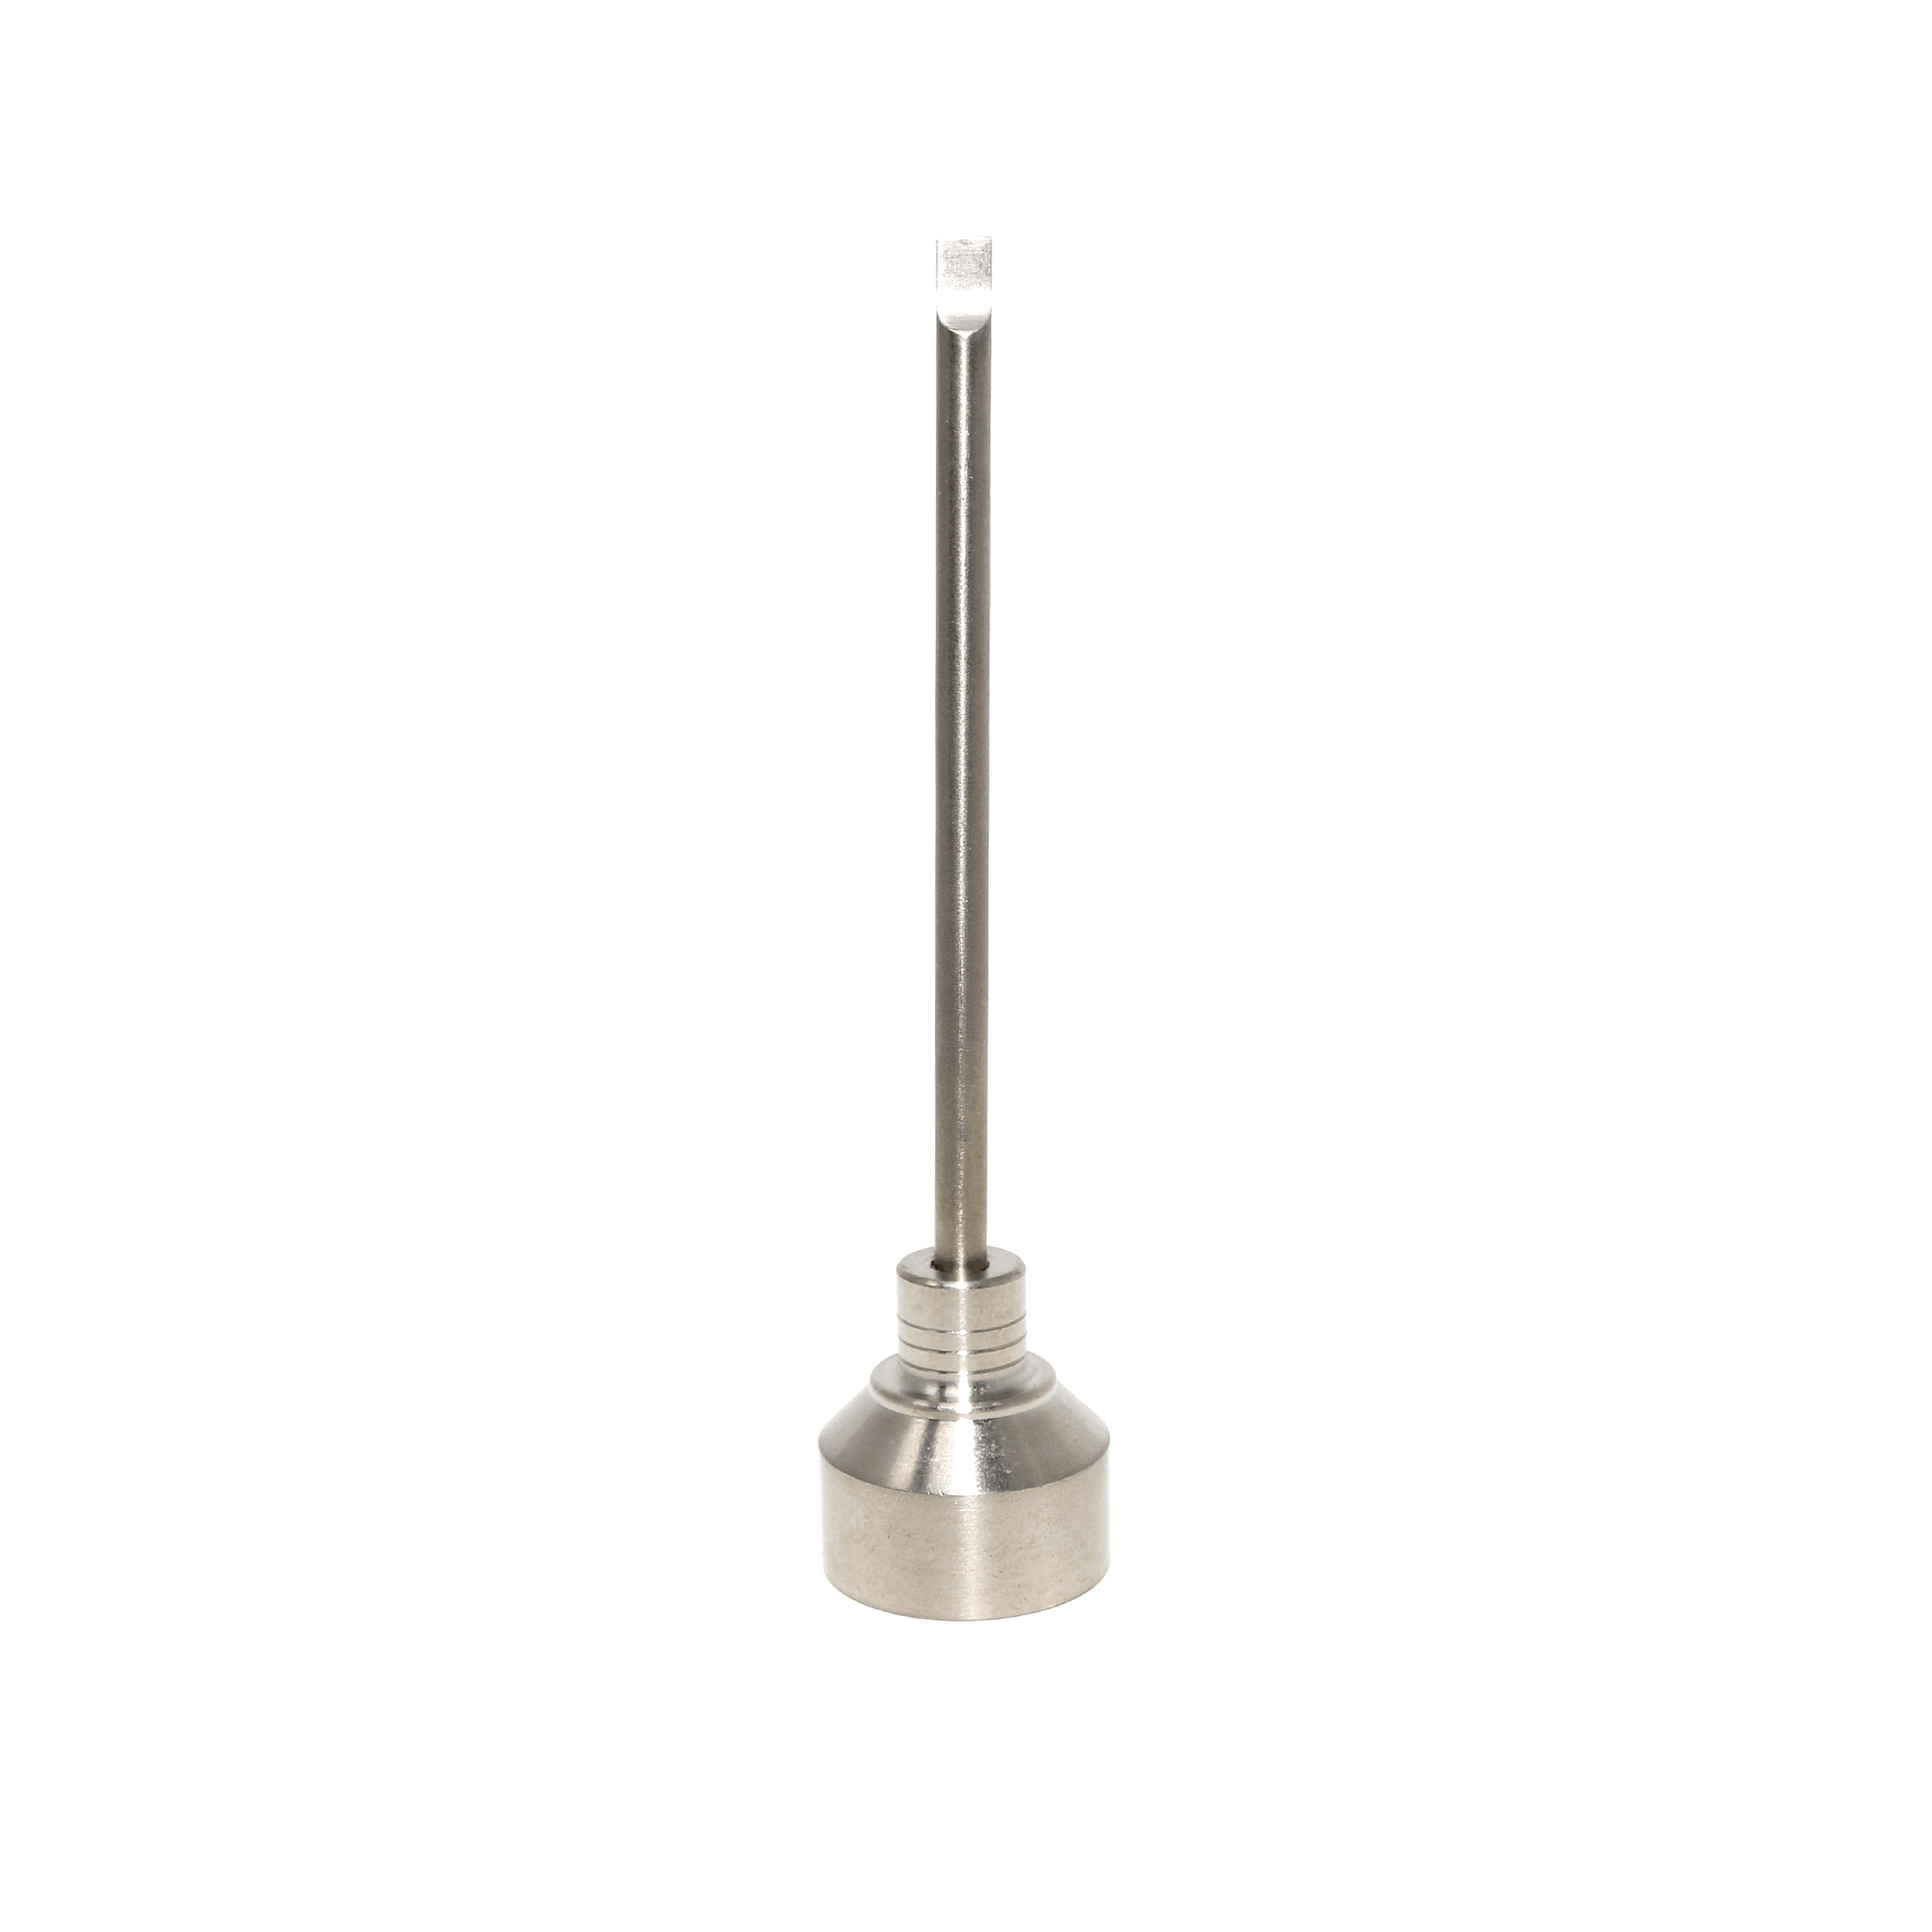 Dab Rig Kit | Showerhead Bubbler with 16-Hole Titanium Nail | Titanium Dab Cap Tool View | DW